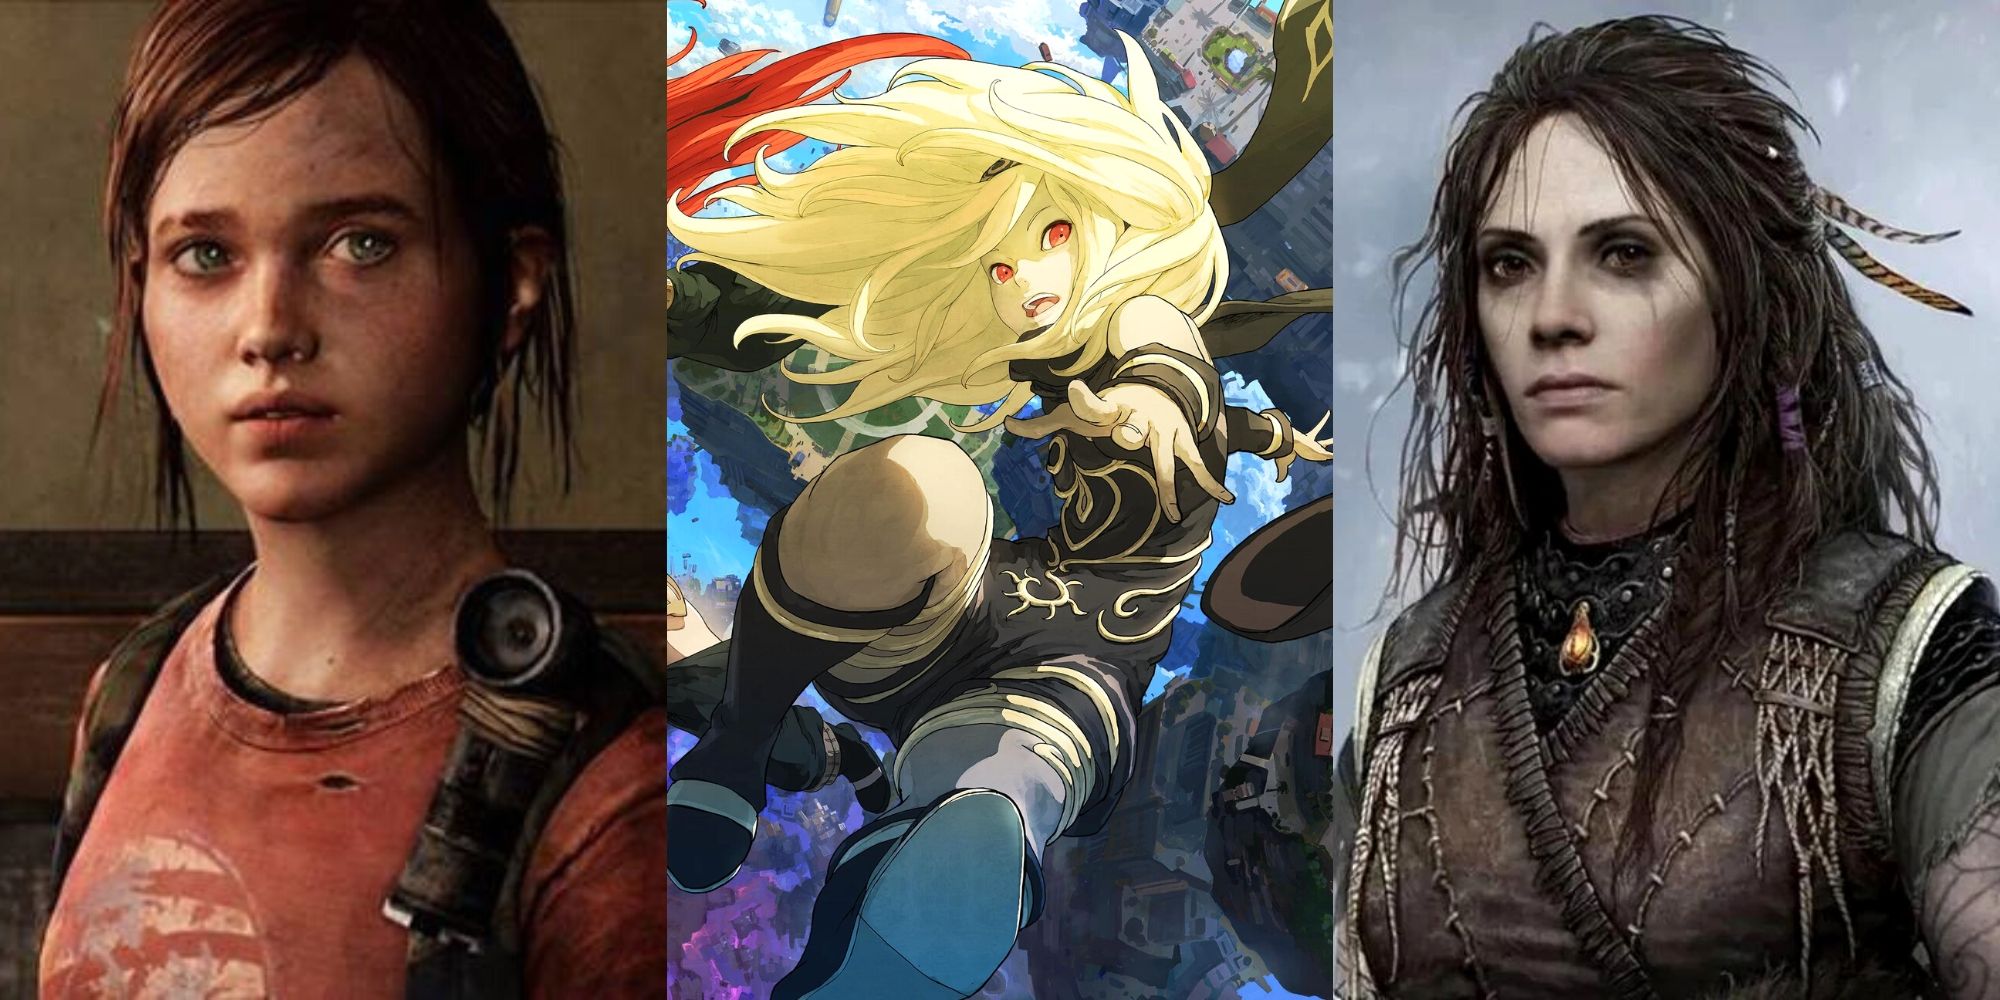 Ellie in The Last of Us, Kat in Gravity Rush, Freya in God of War